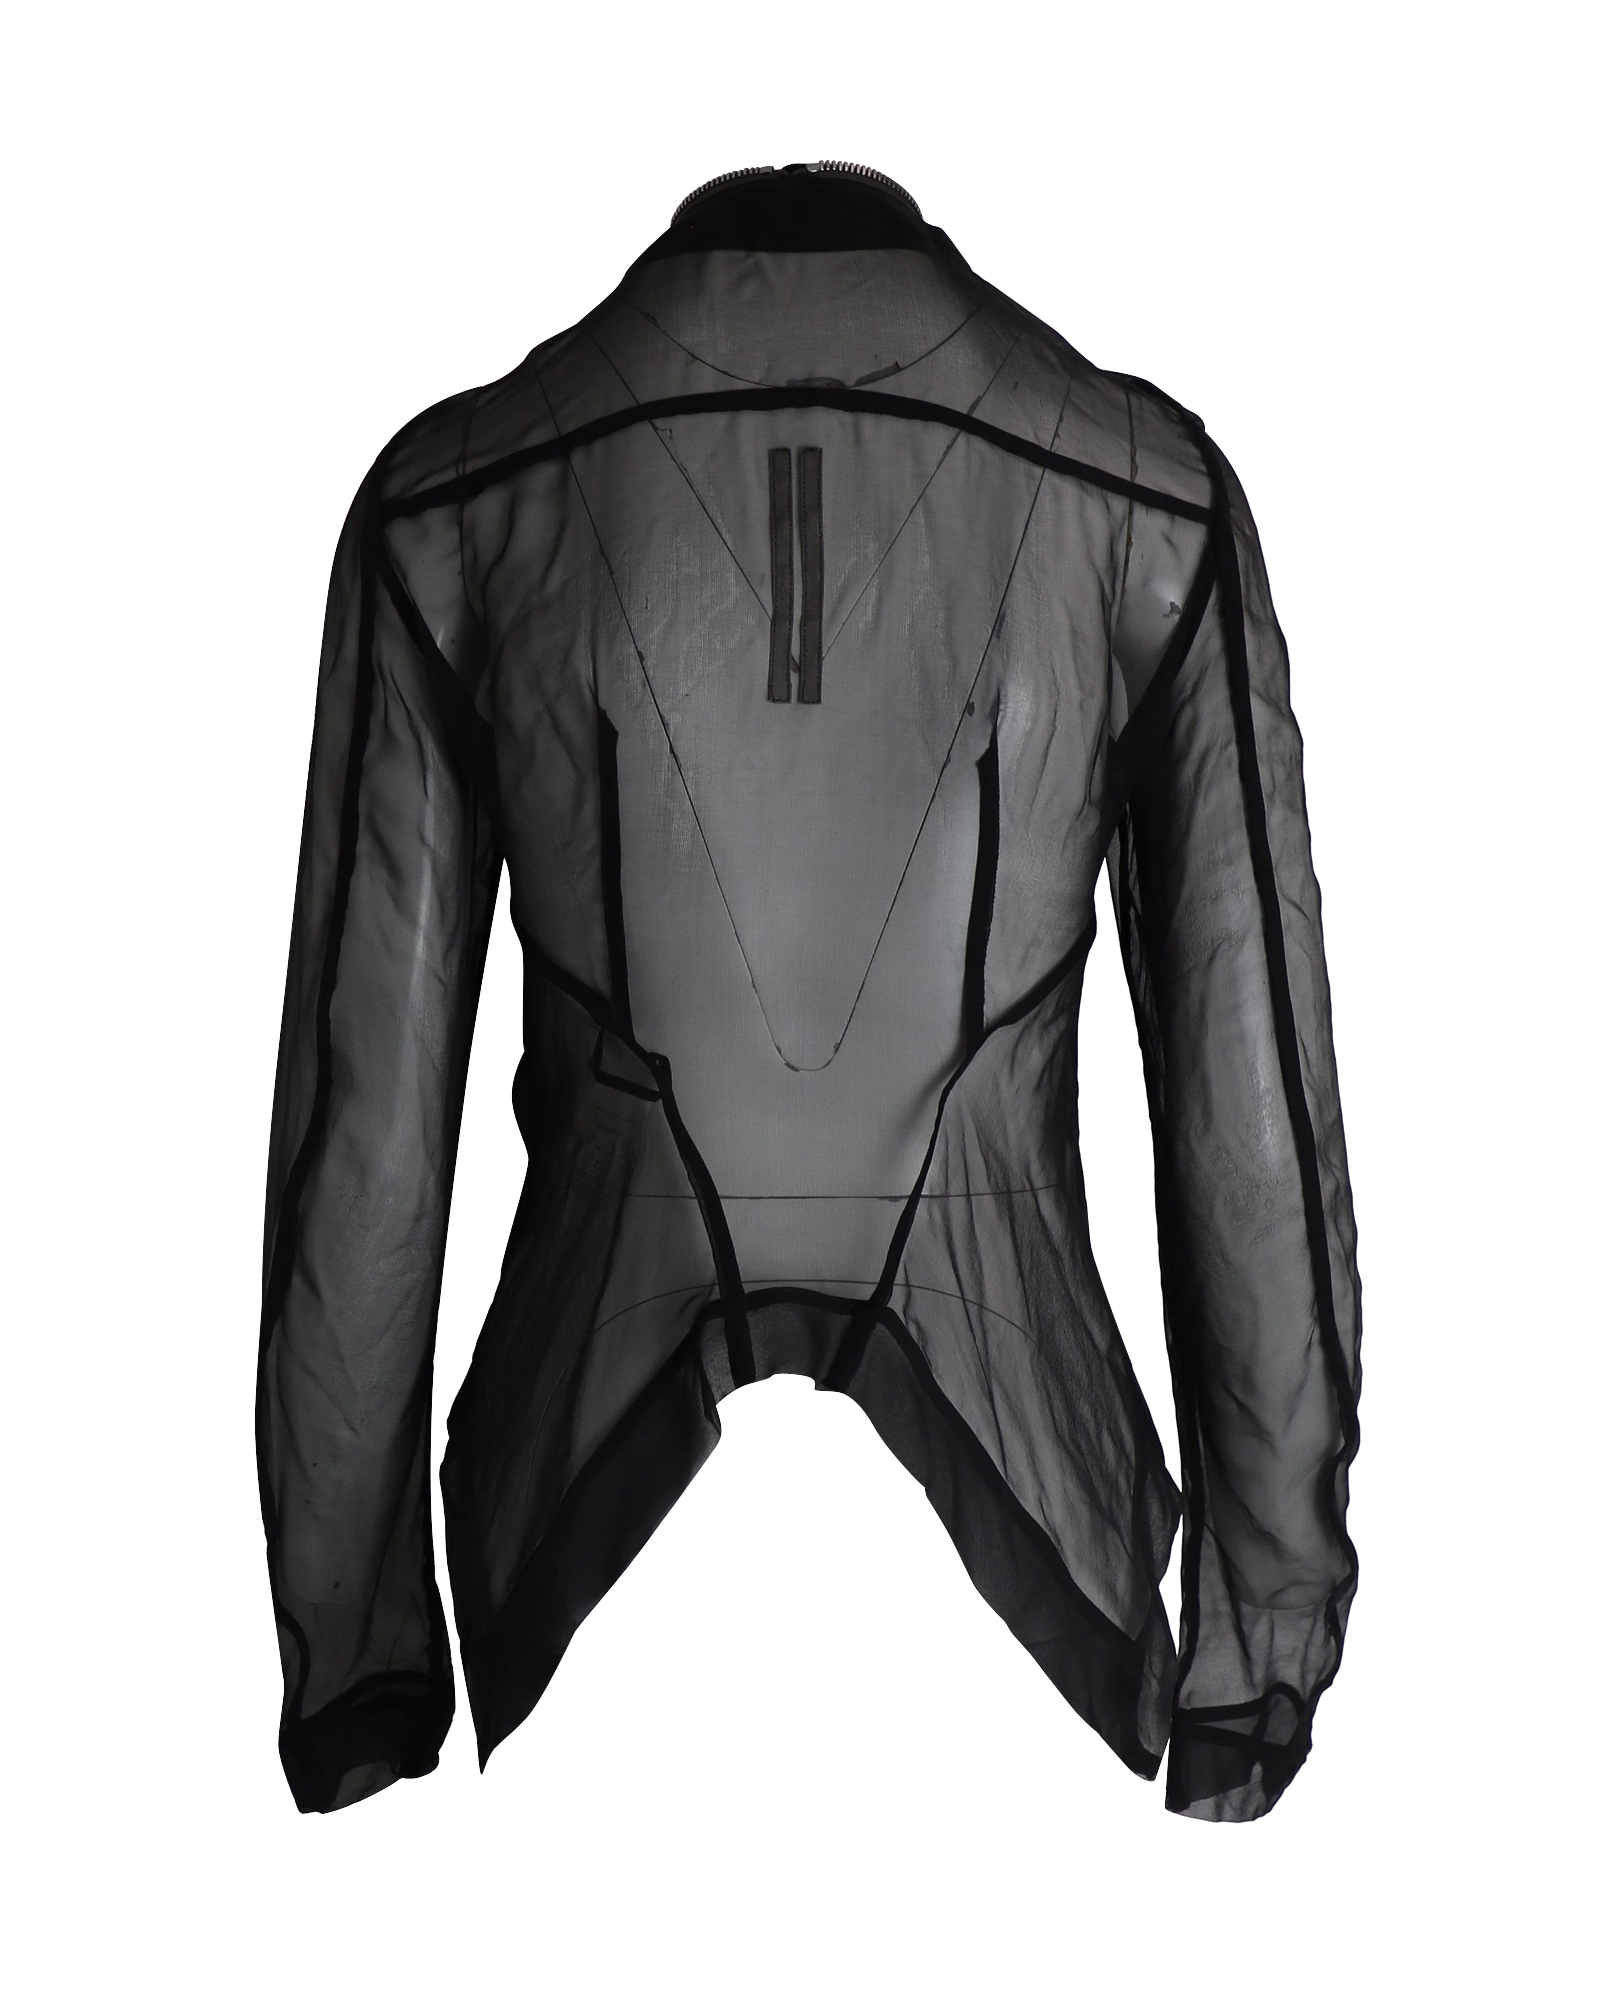 Sheer Black Silk Bomber Jacket with Front Zipper.